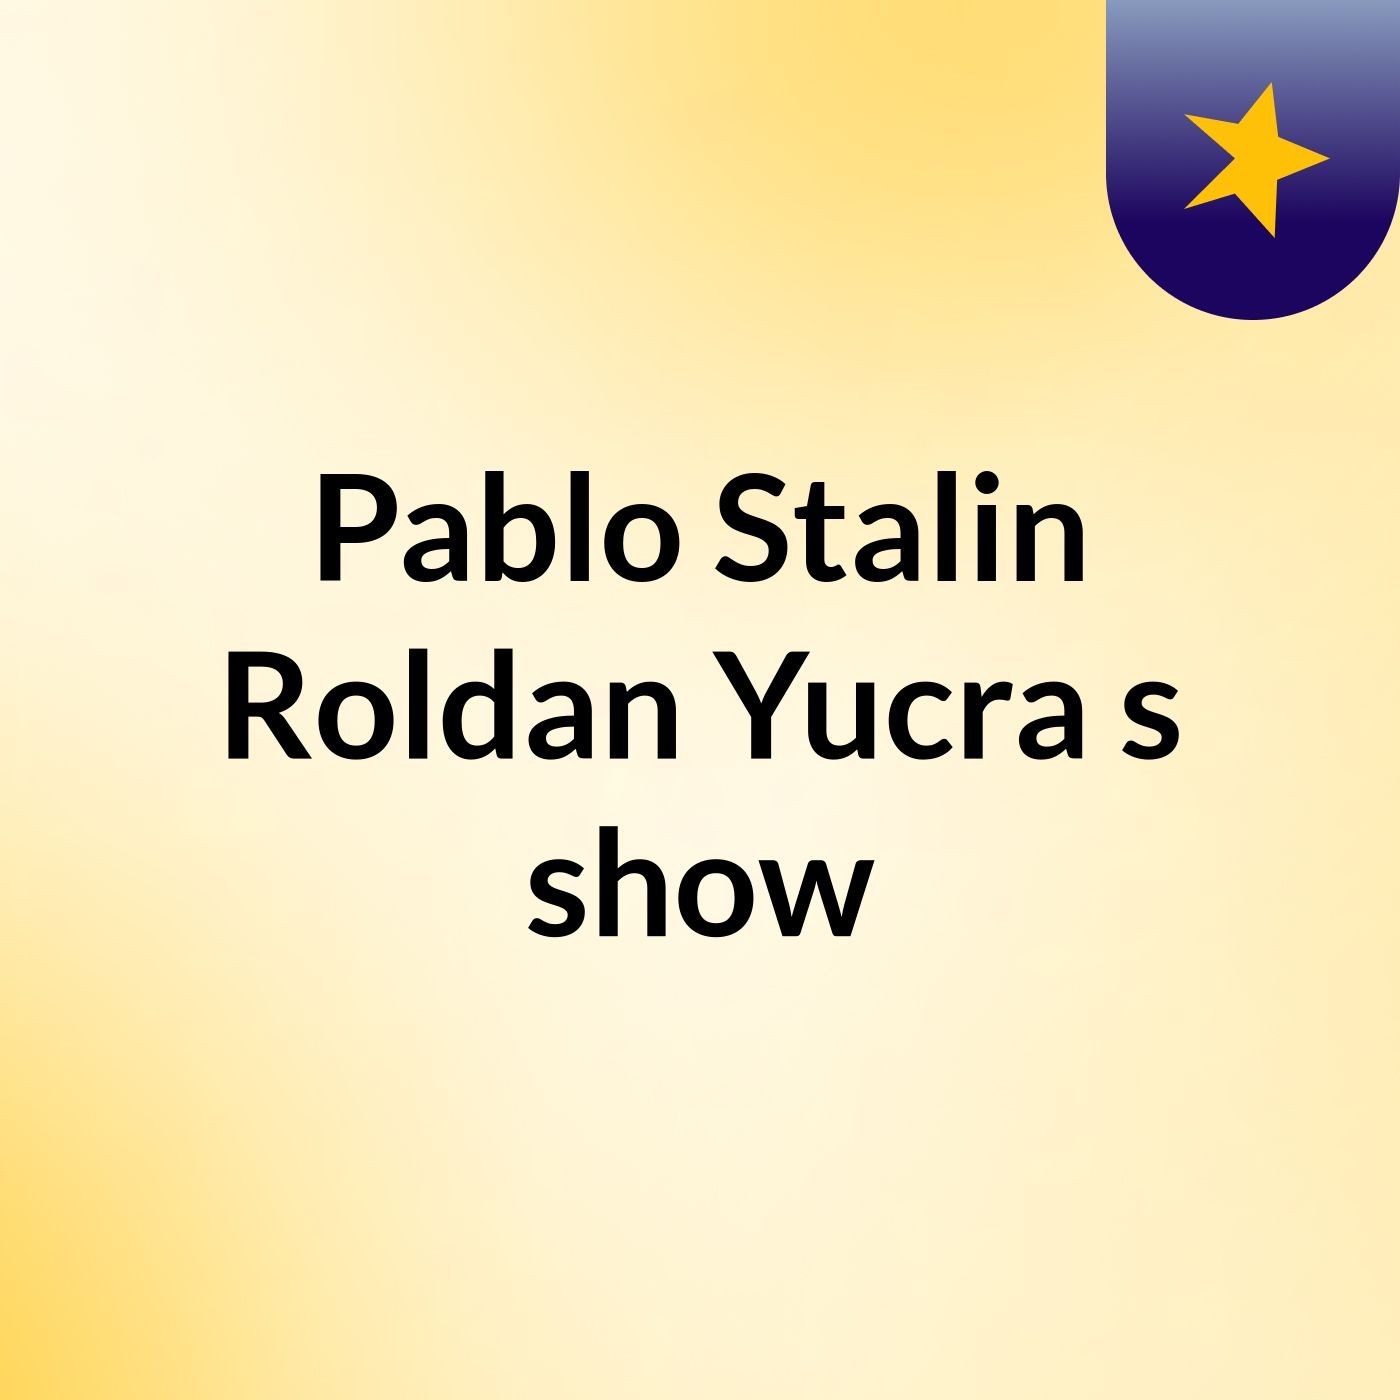 Pablo Stalin Roldan Yucra's show